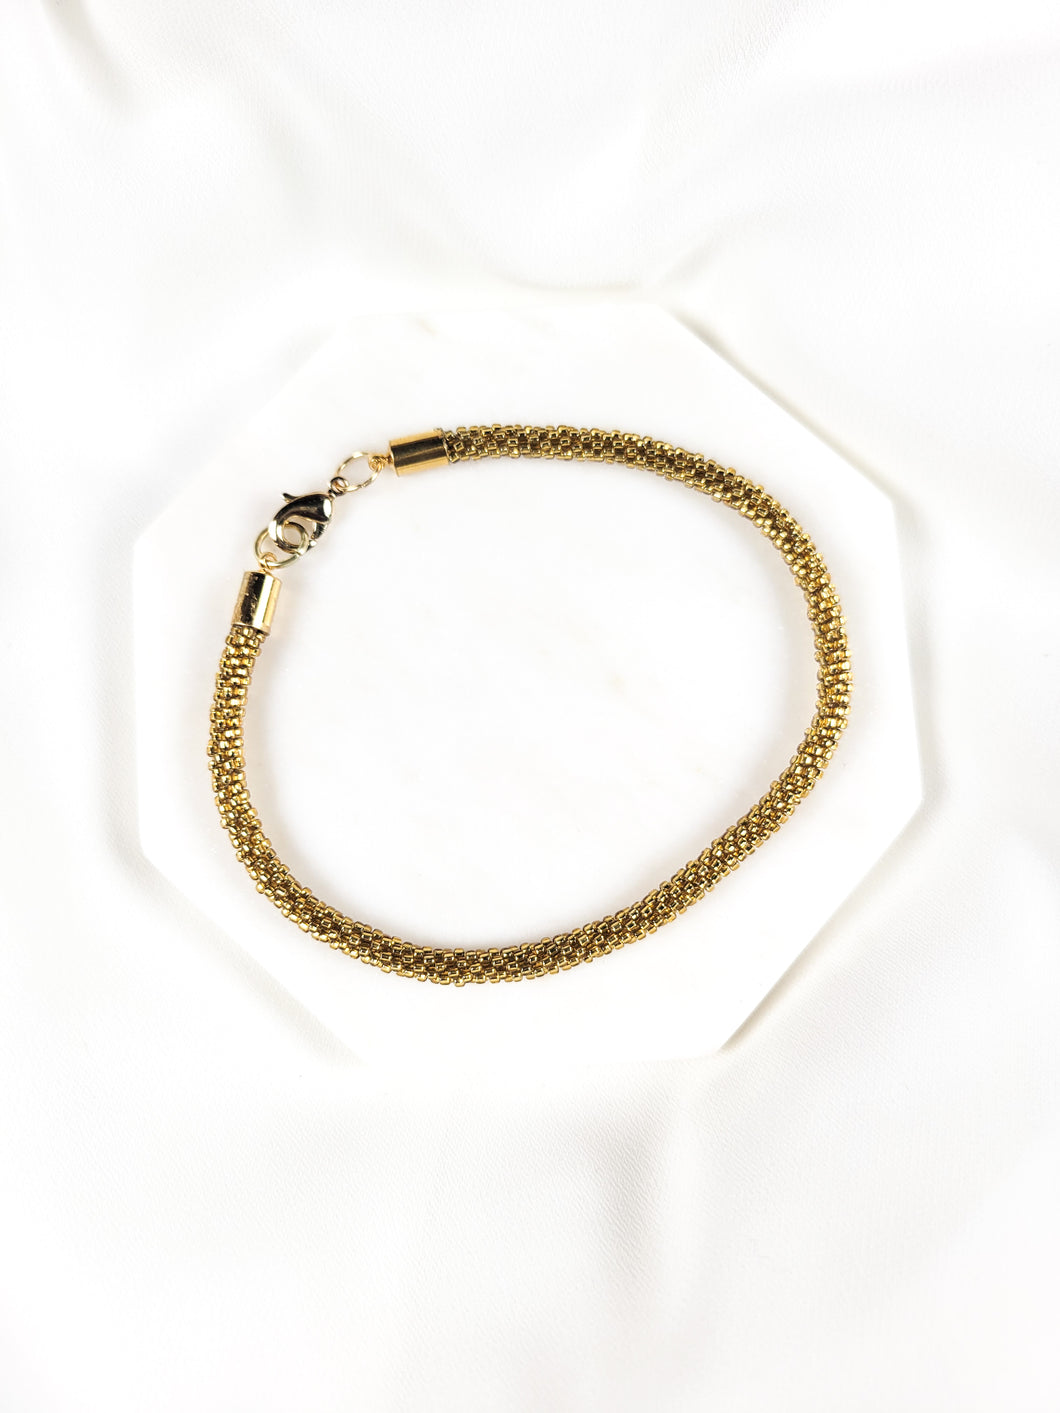 Gold Kumihimo Bracelet